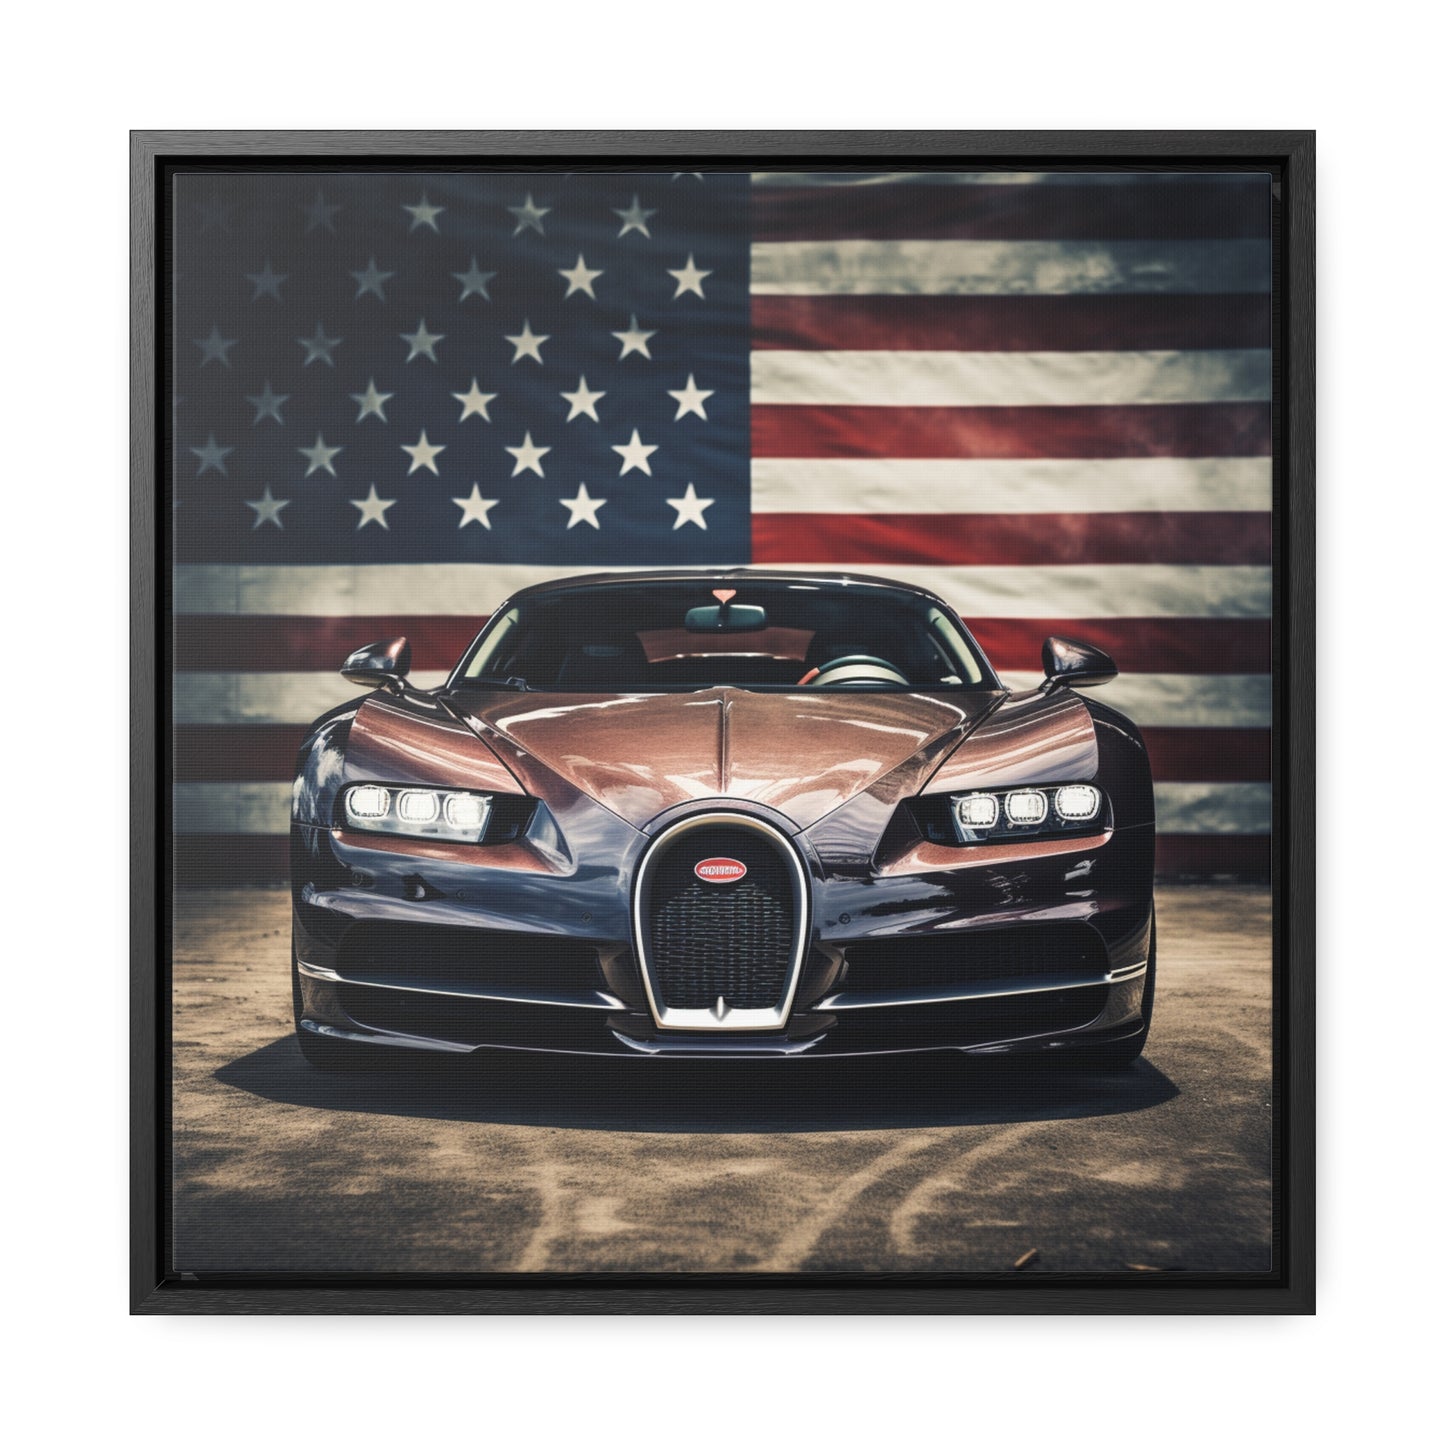 Gallery Canvas Wraps, Square Frame Bugatti Flag 4